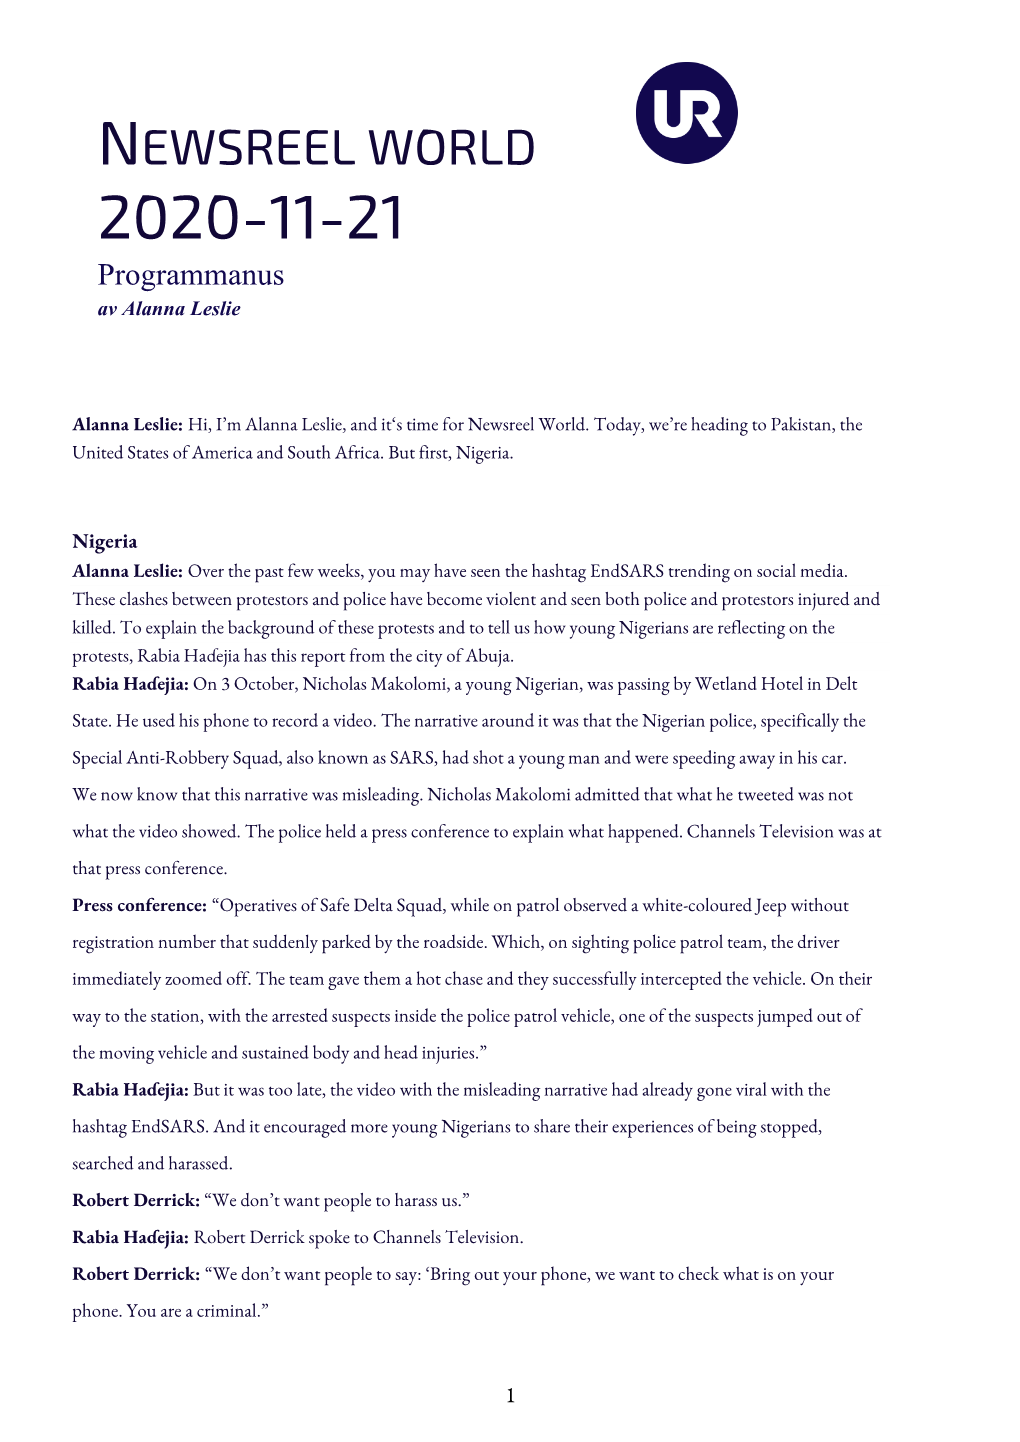 NEWSREEL WORLD 2020-11-21 Programmanus Av Alanna Leslie